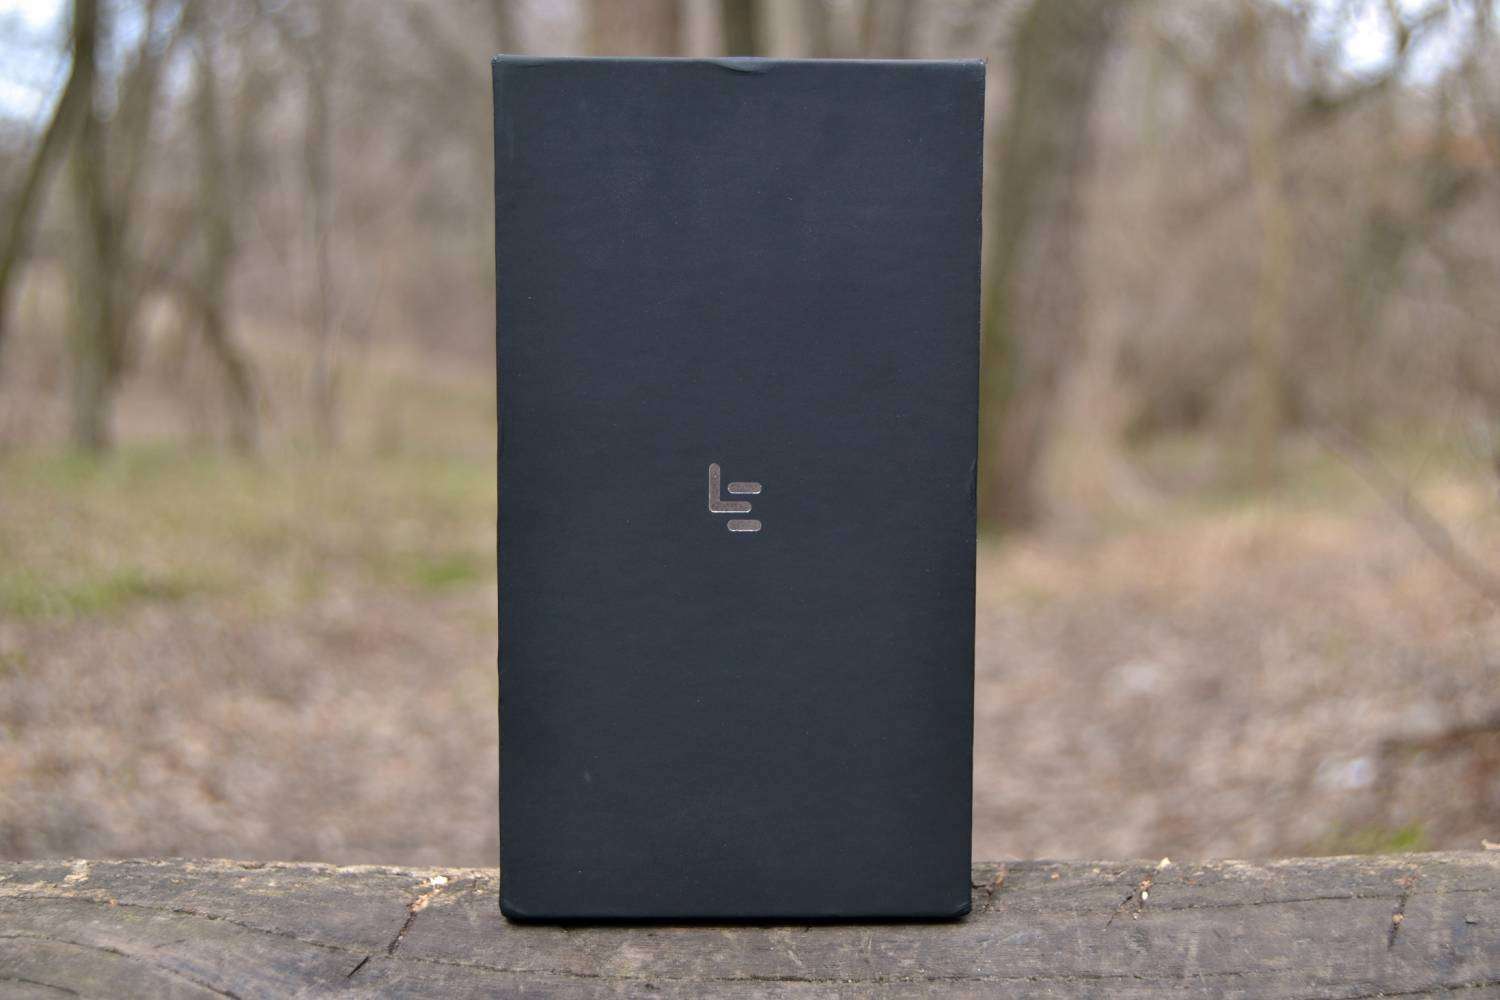 TomTop: Подробно о LeEco Le 2 X527 - смартфон без компромиссов?